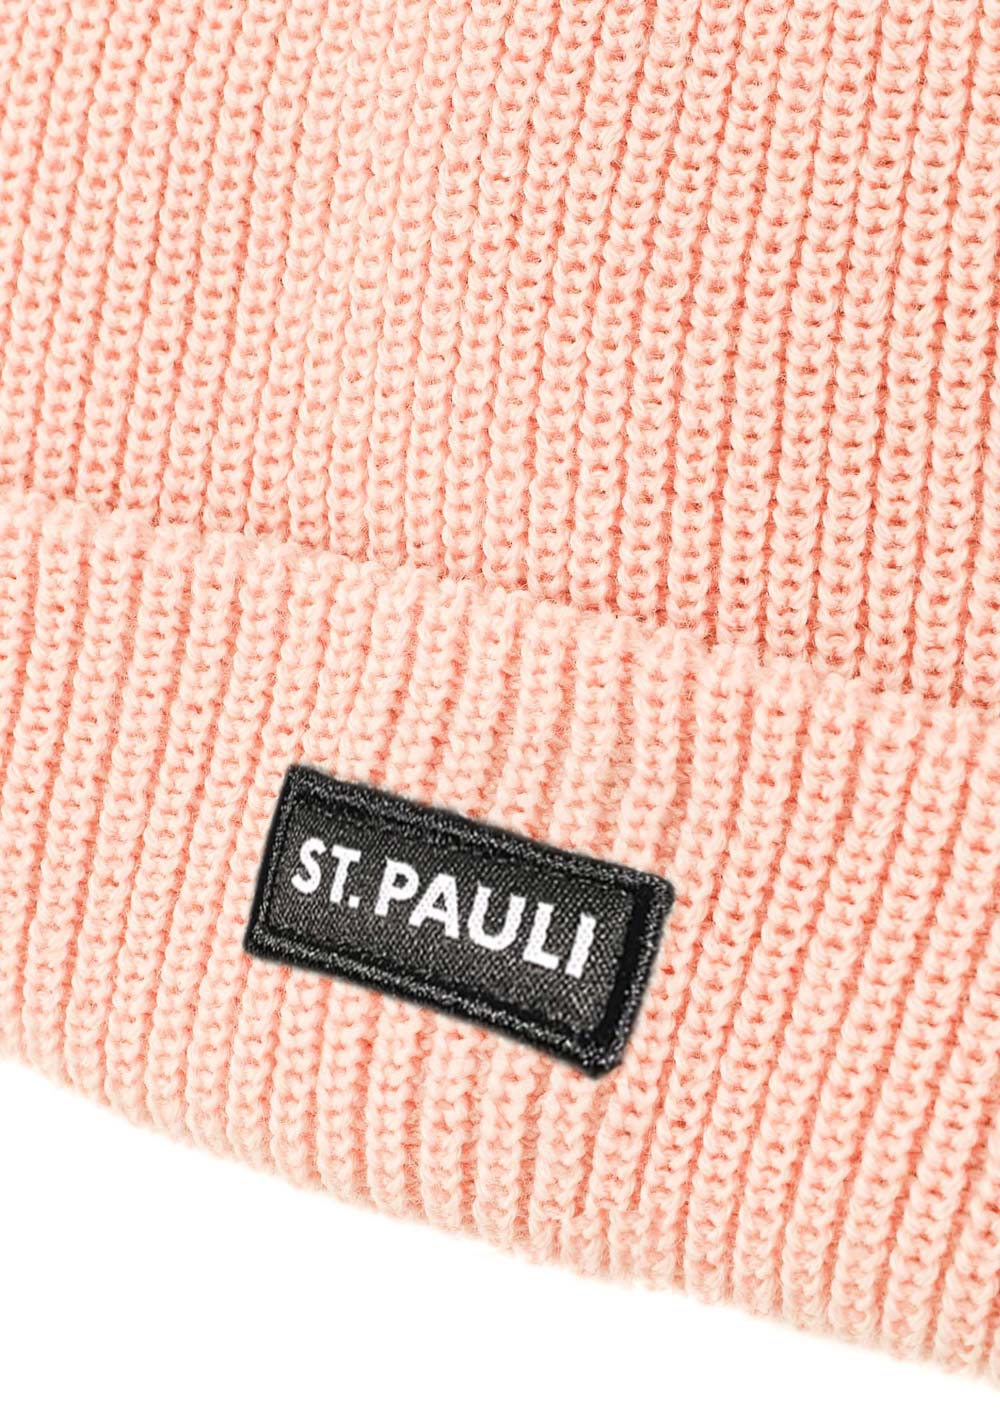 Knitted Beanie "St. Pauli" light pink